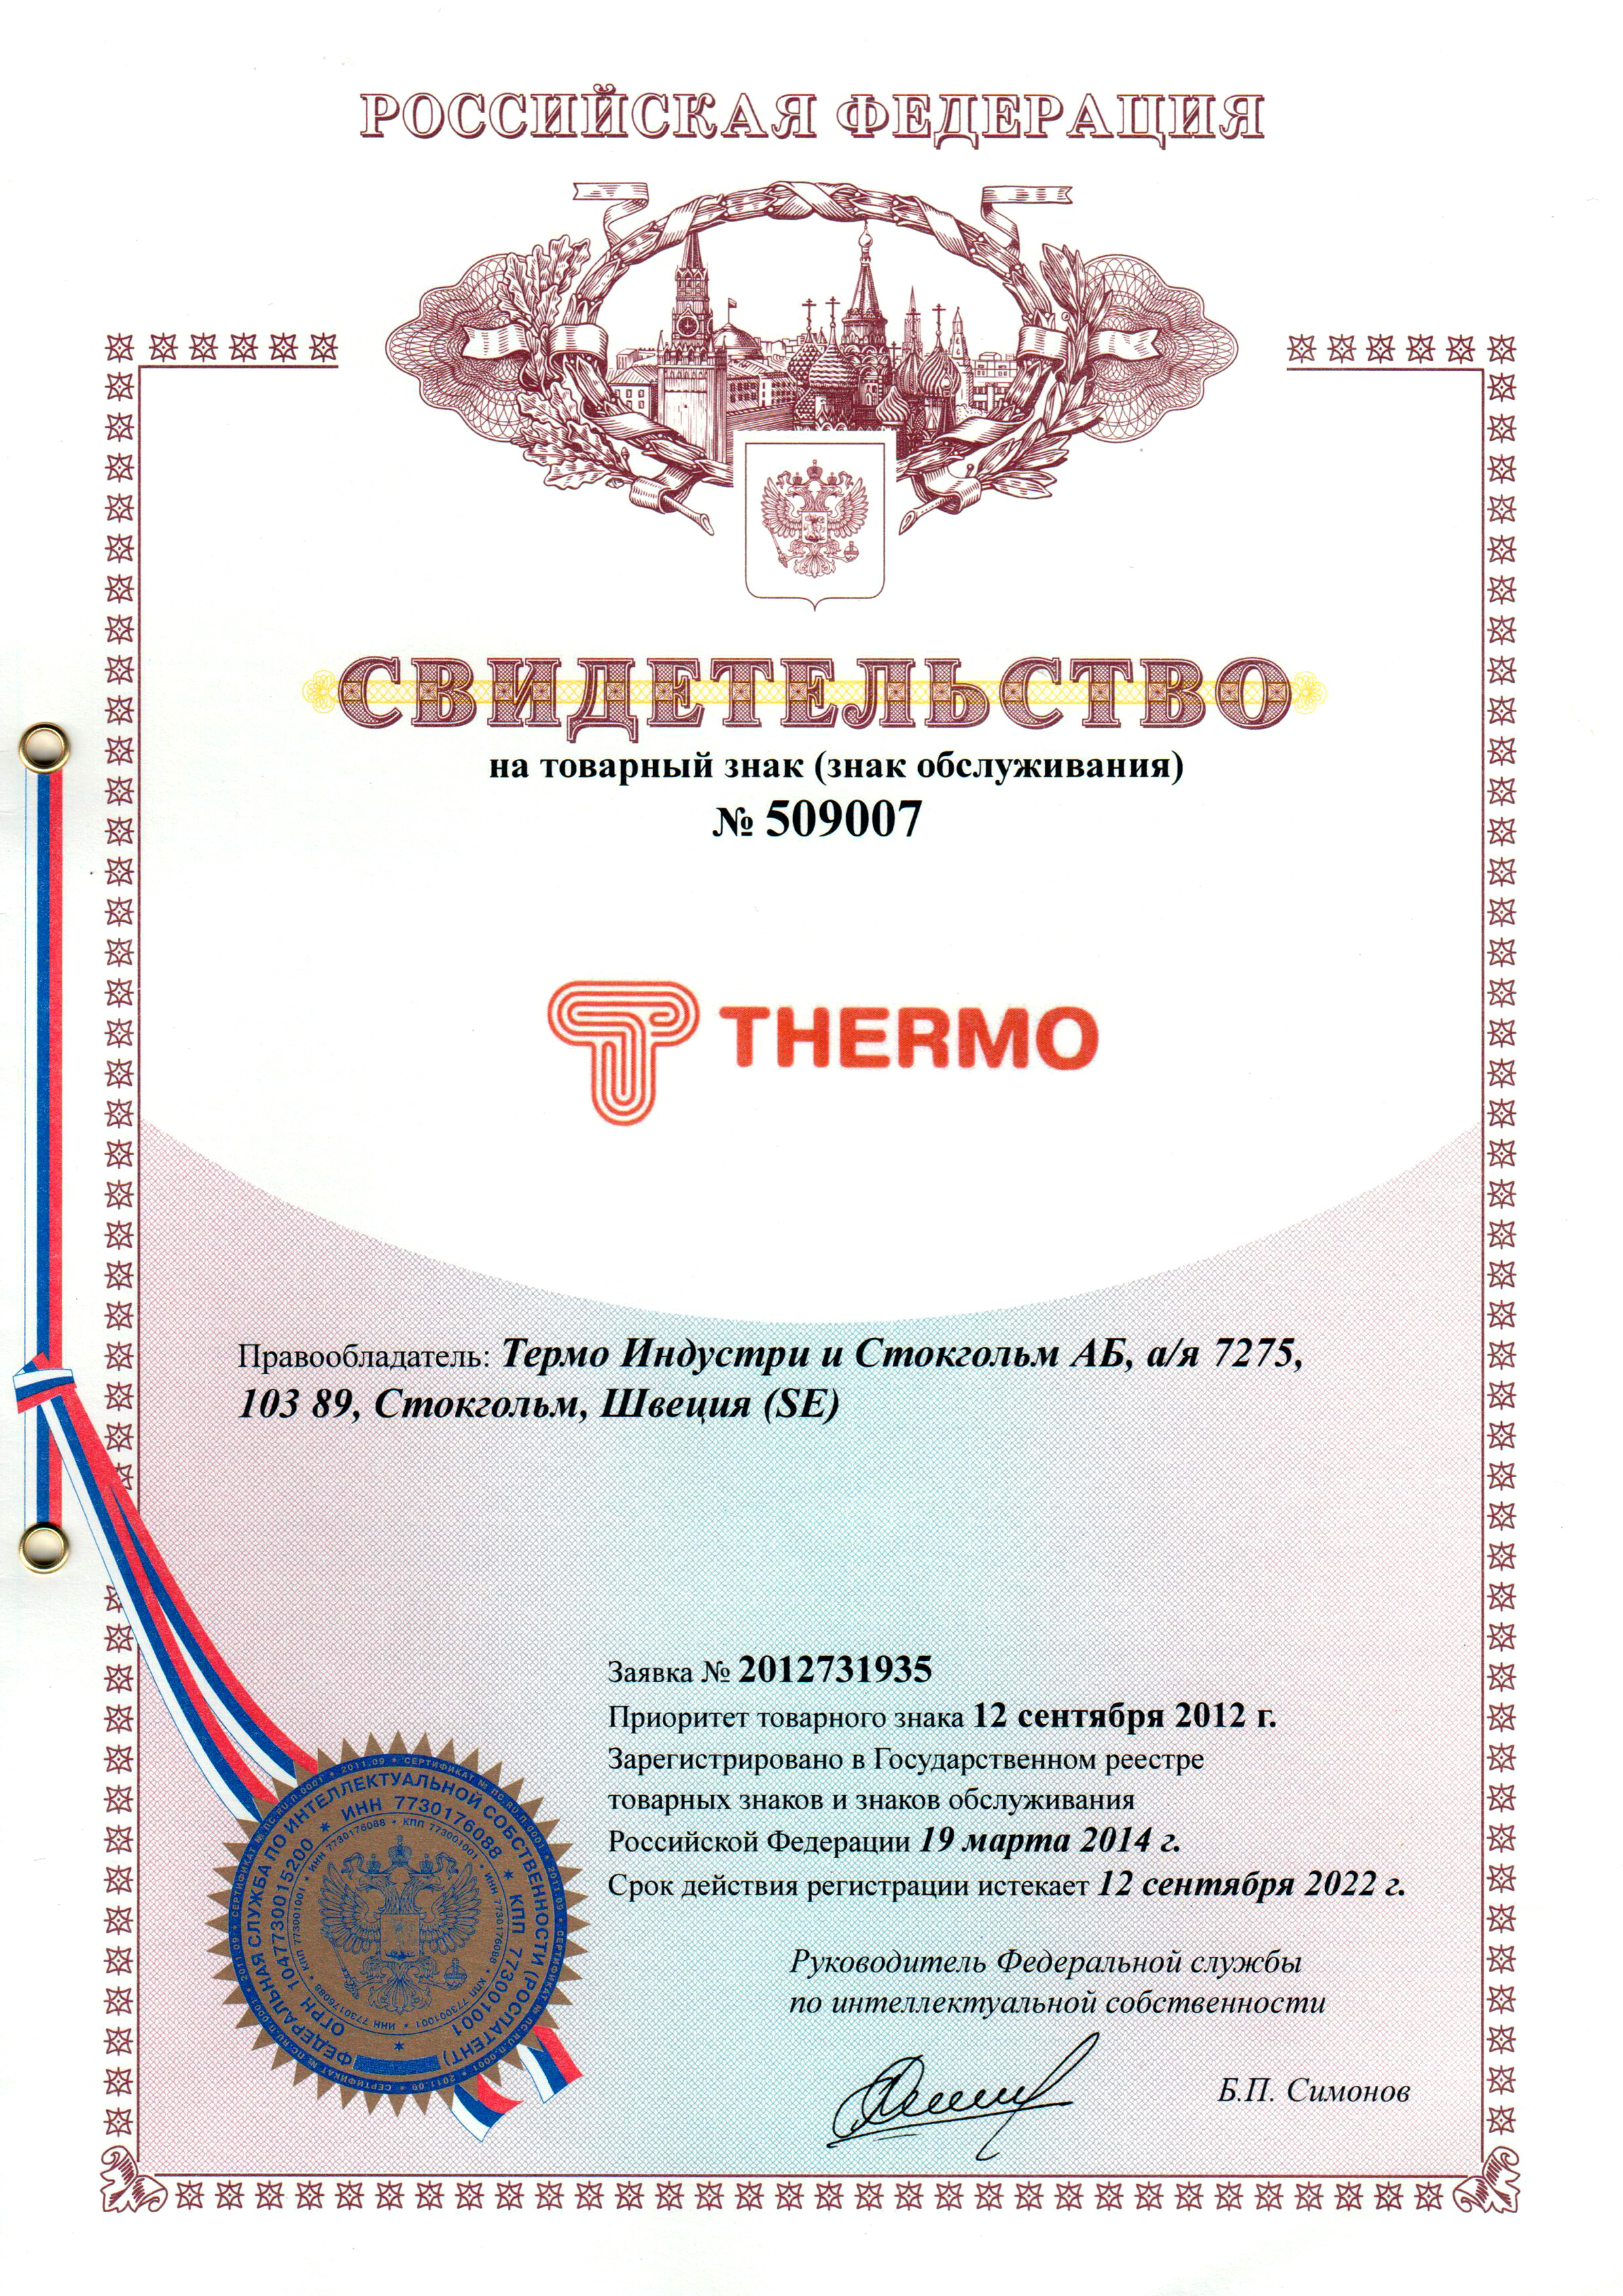 Свидетельство о регистрации товарного знака Thermo на территории РФ